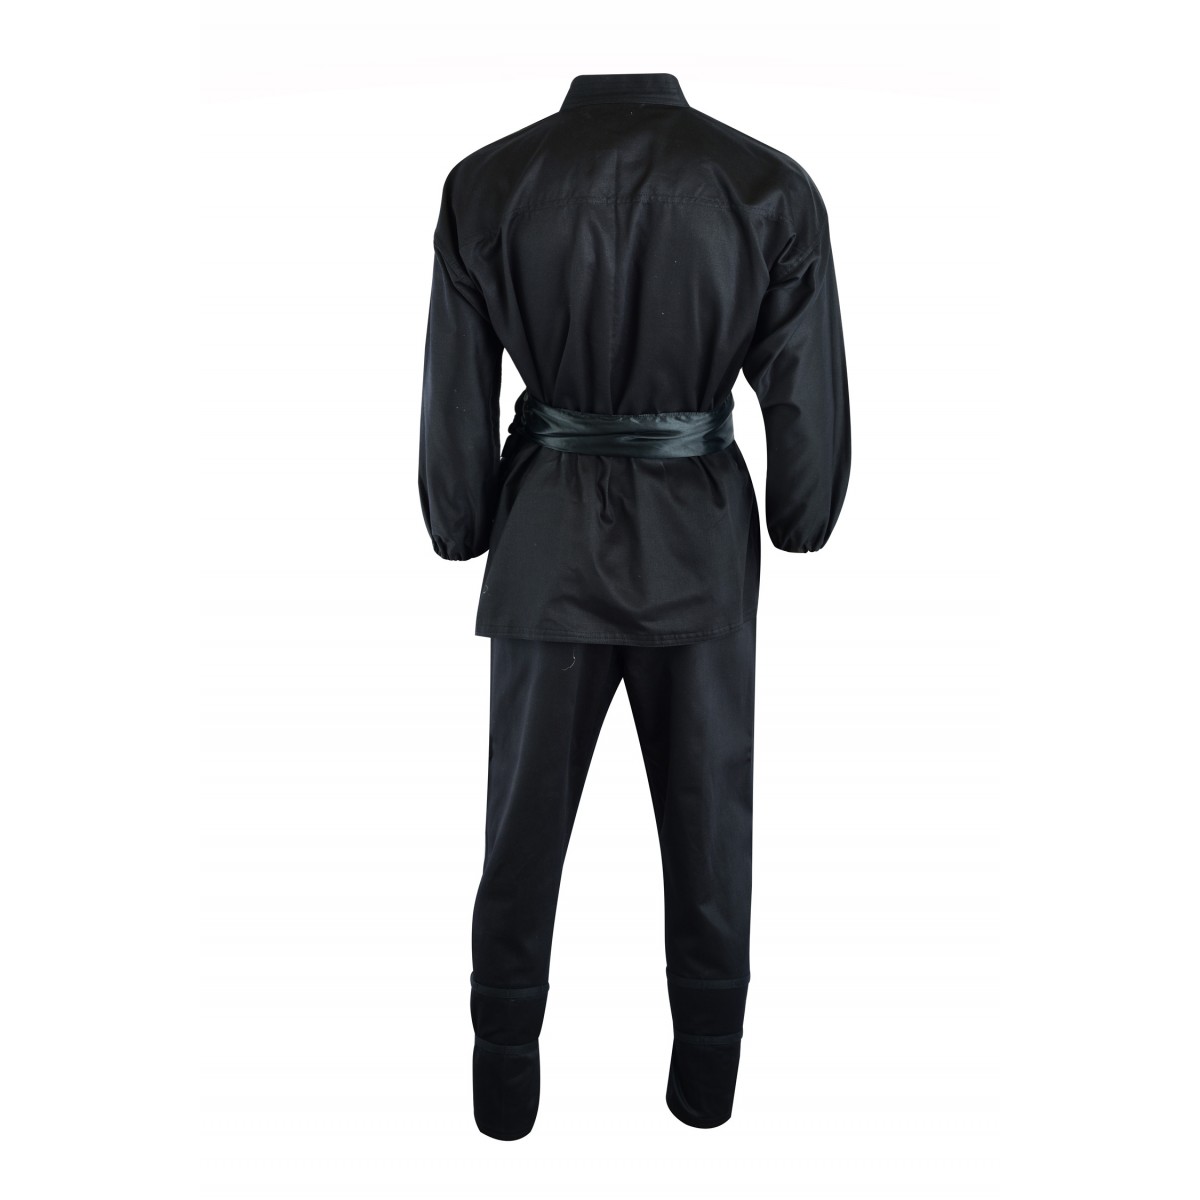 Malino Adult Ninja Suit Cotton Black 8oz